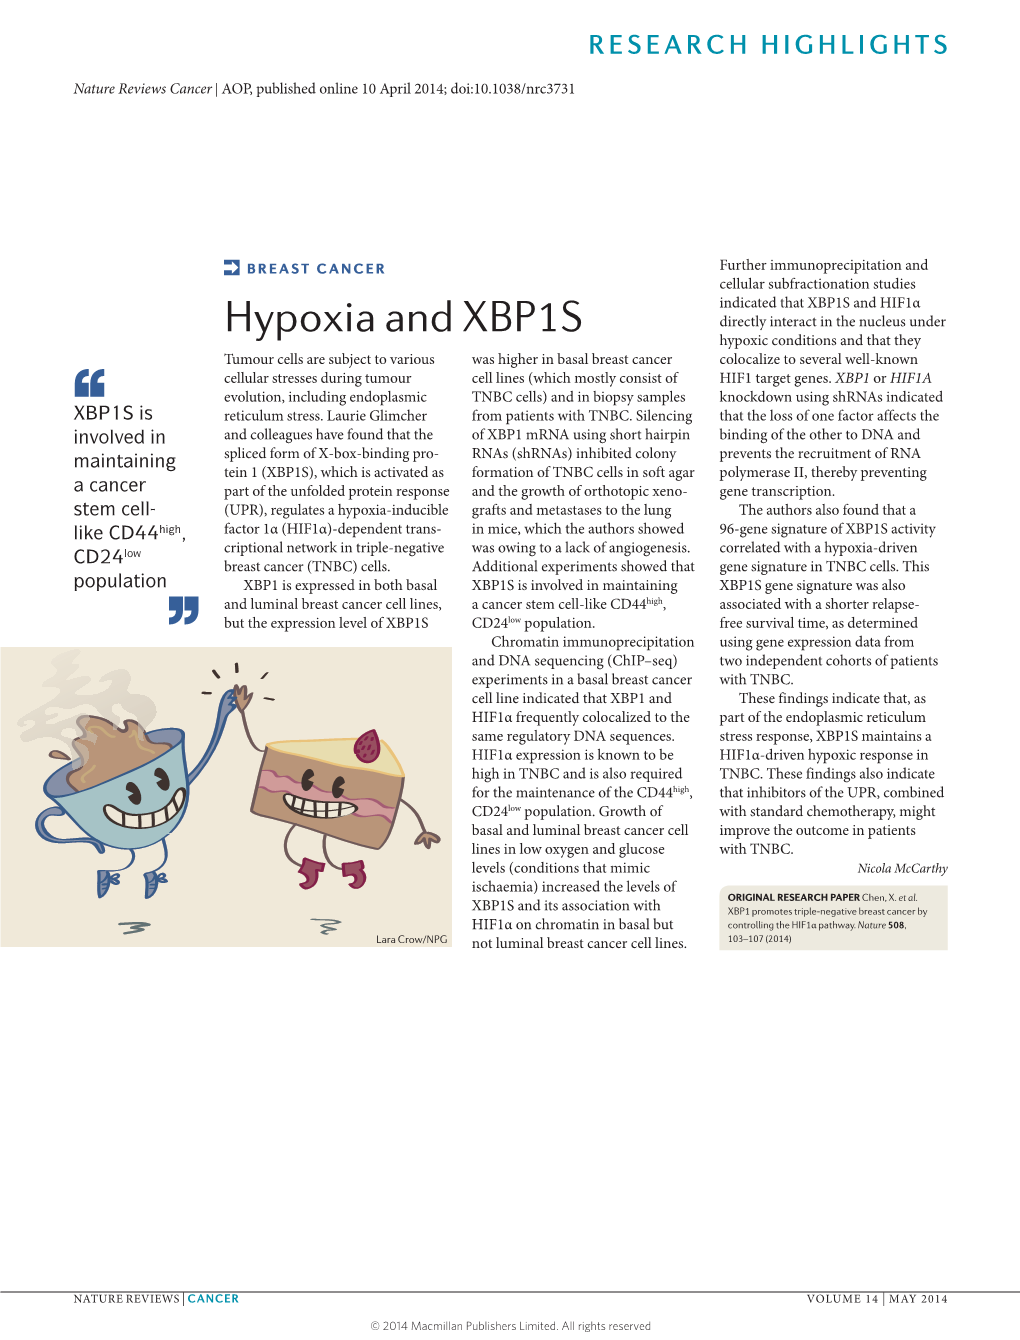 Hypoxia and XBP1S